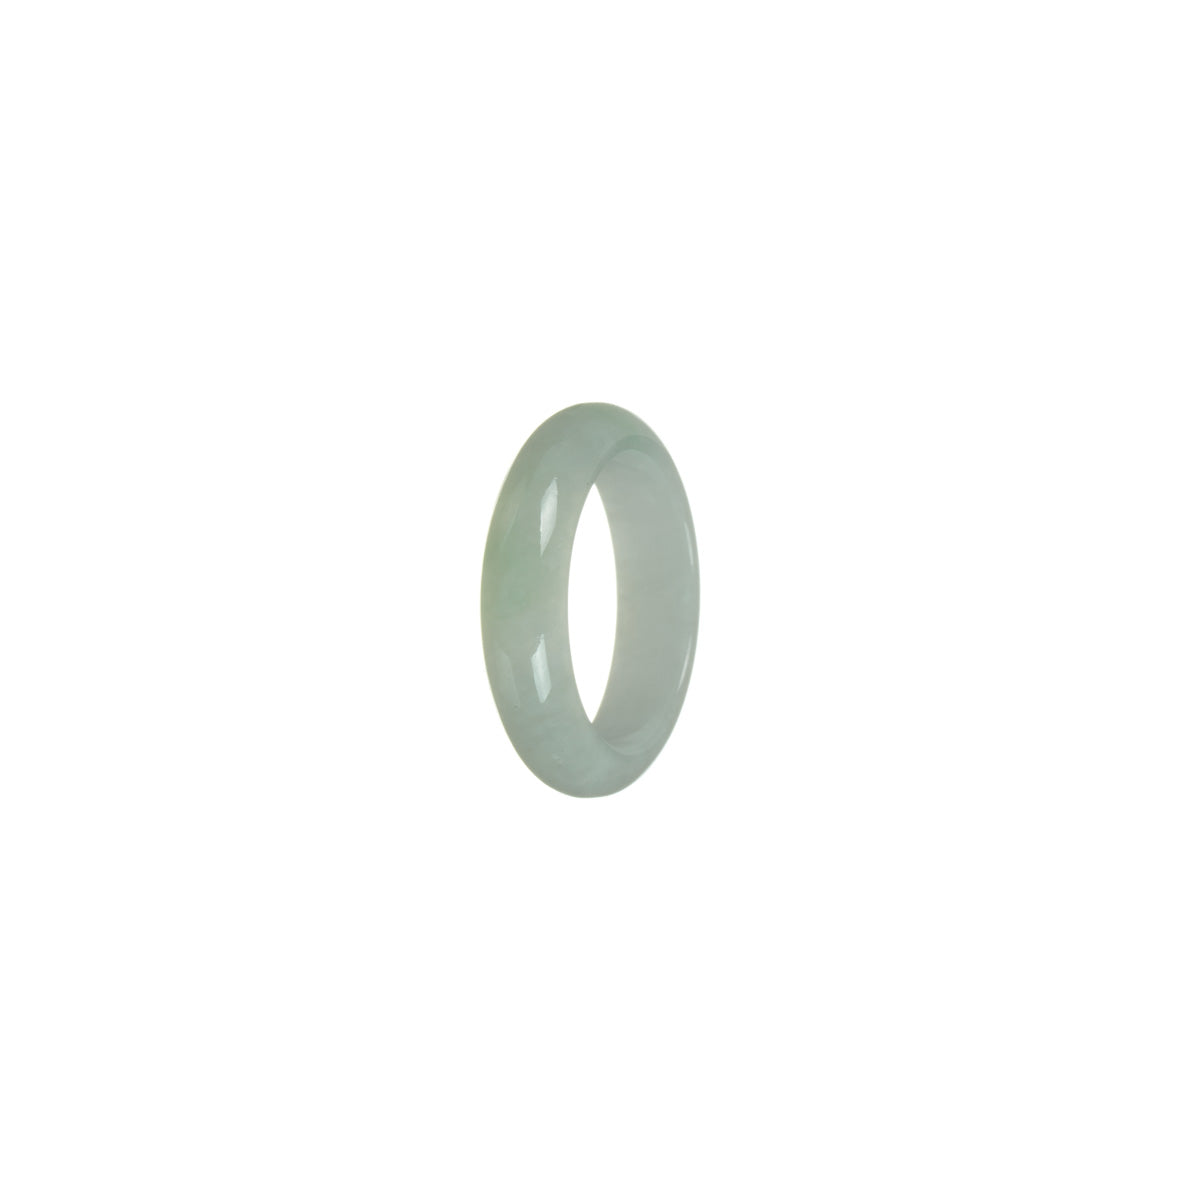 Certified White Burma Jade Ring - Size R 1/2